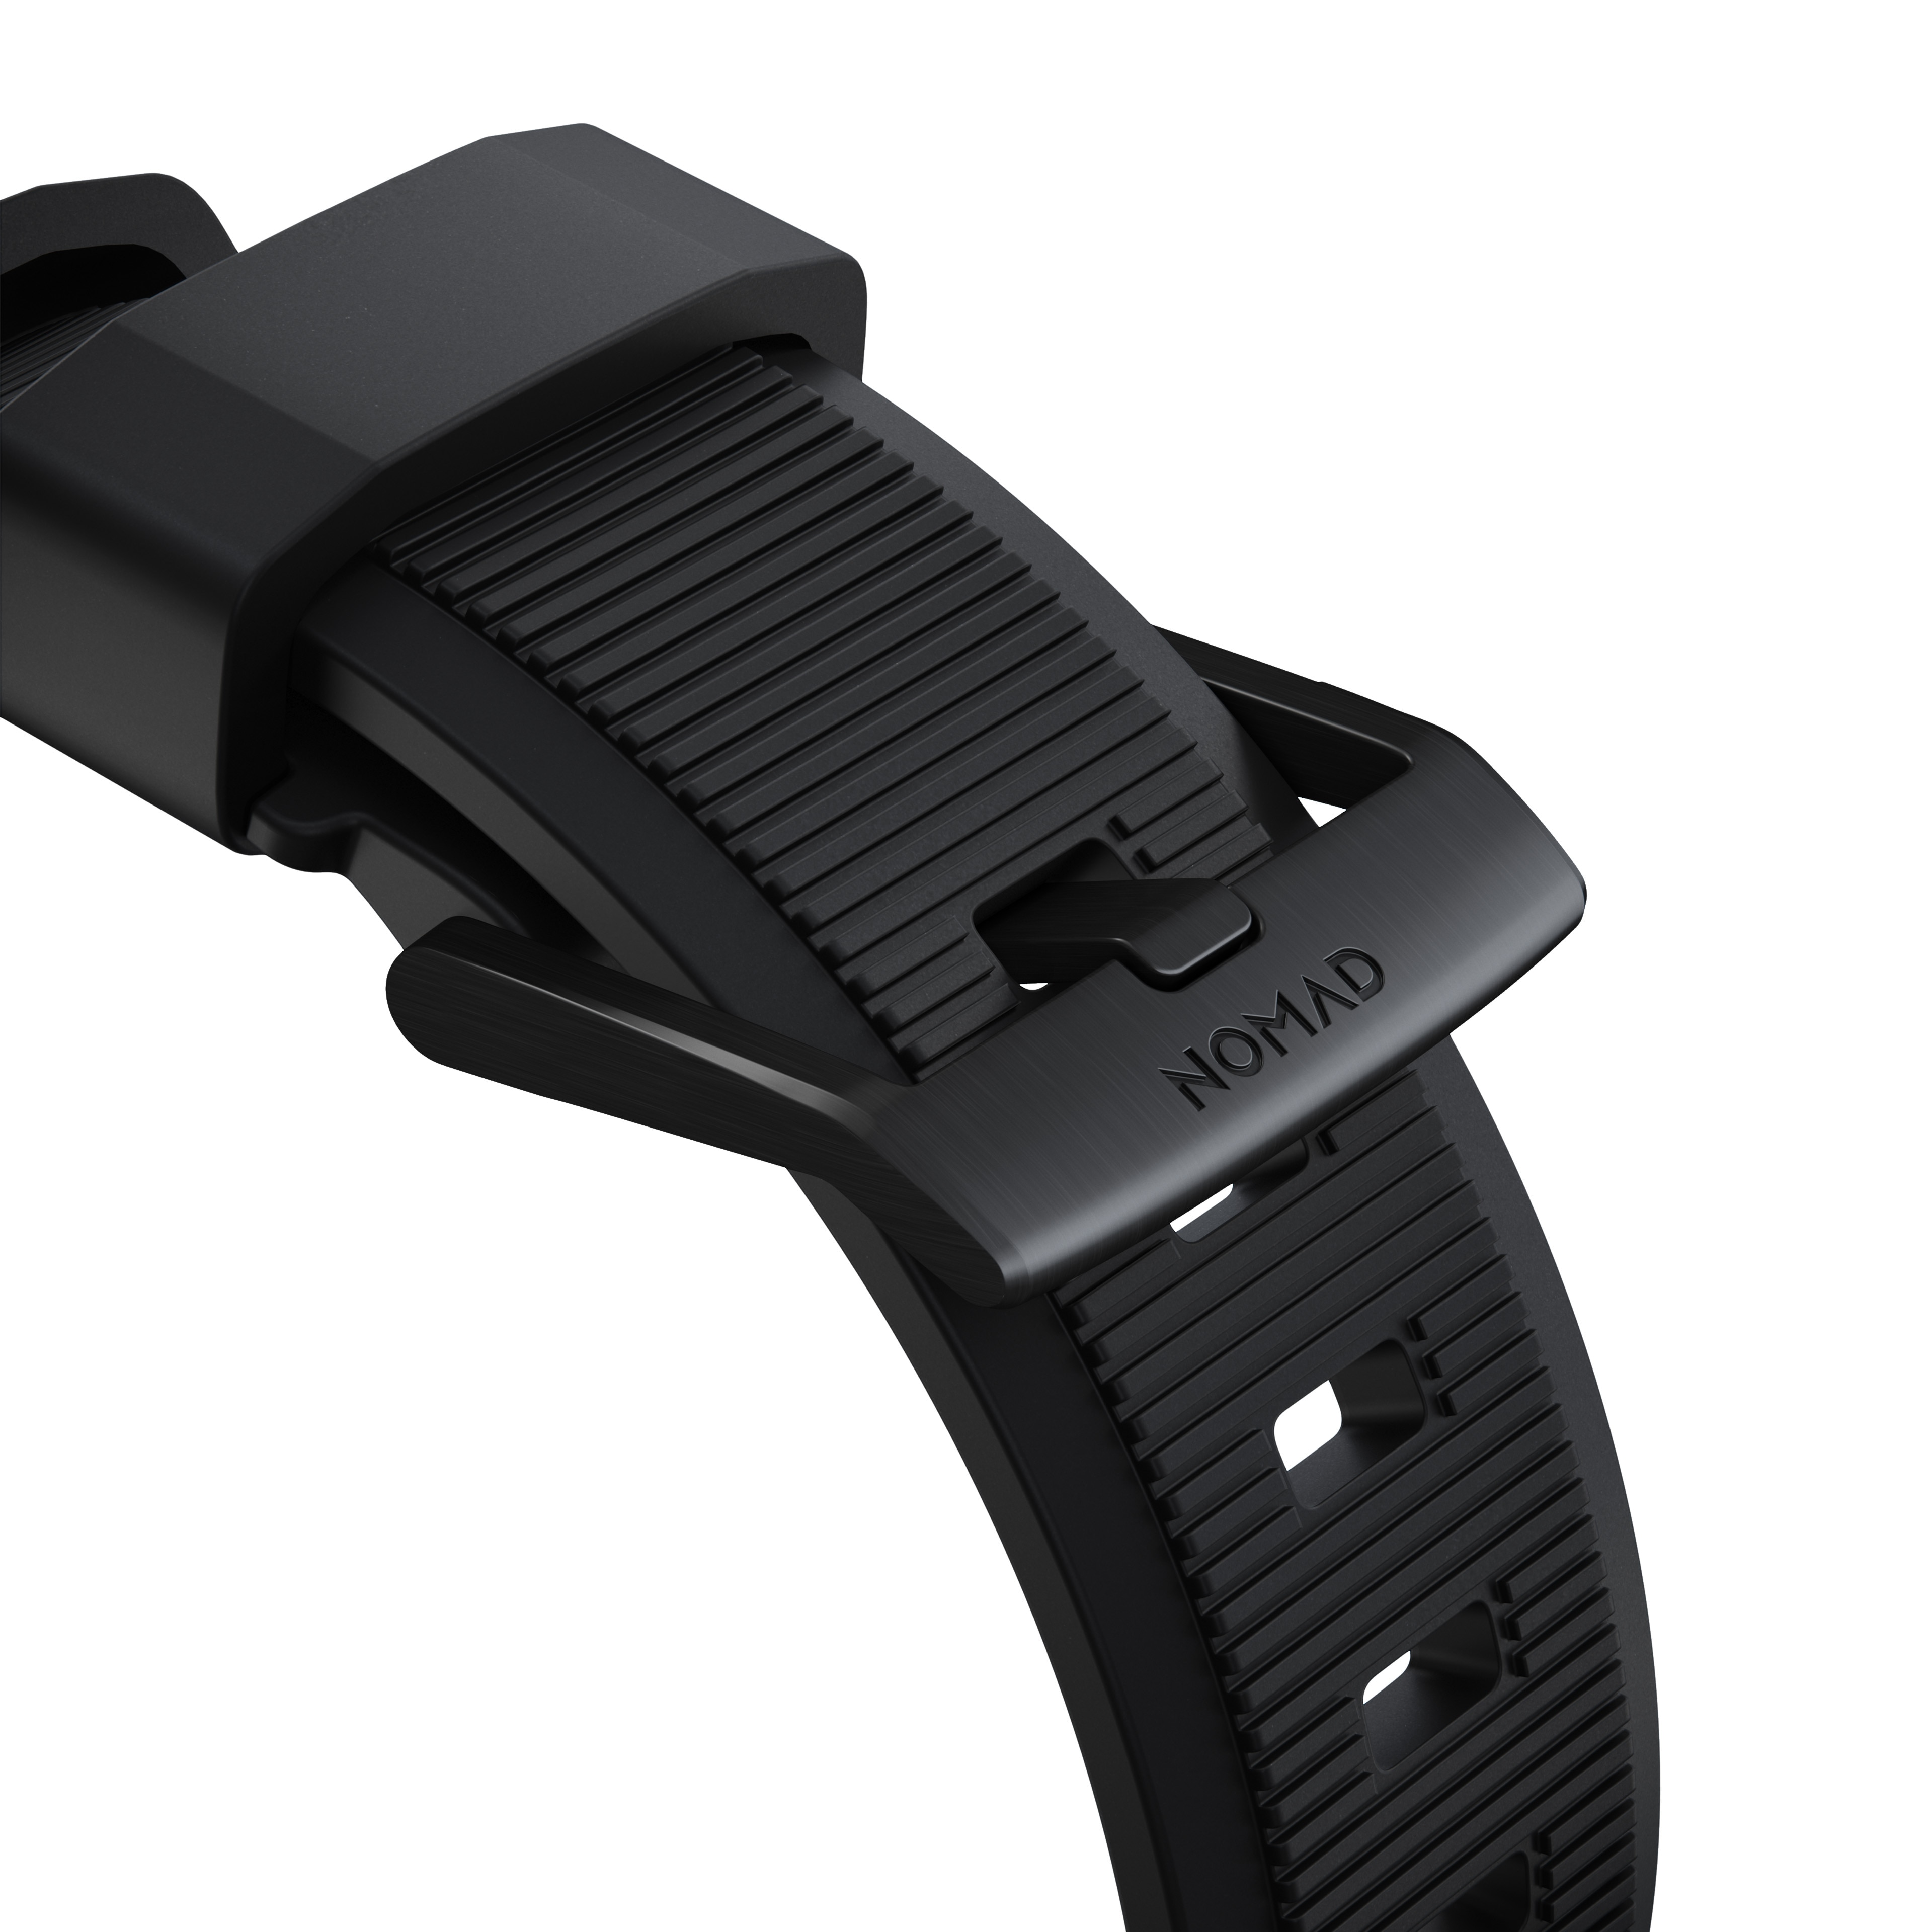 Rugged Band Apple Watch SE 44mm Black (Black Hardware)